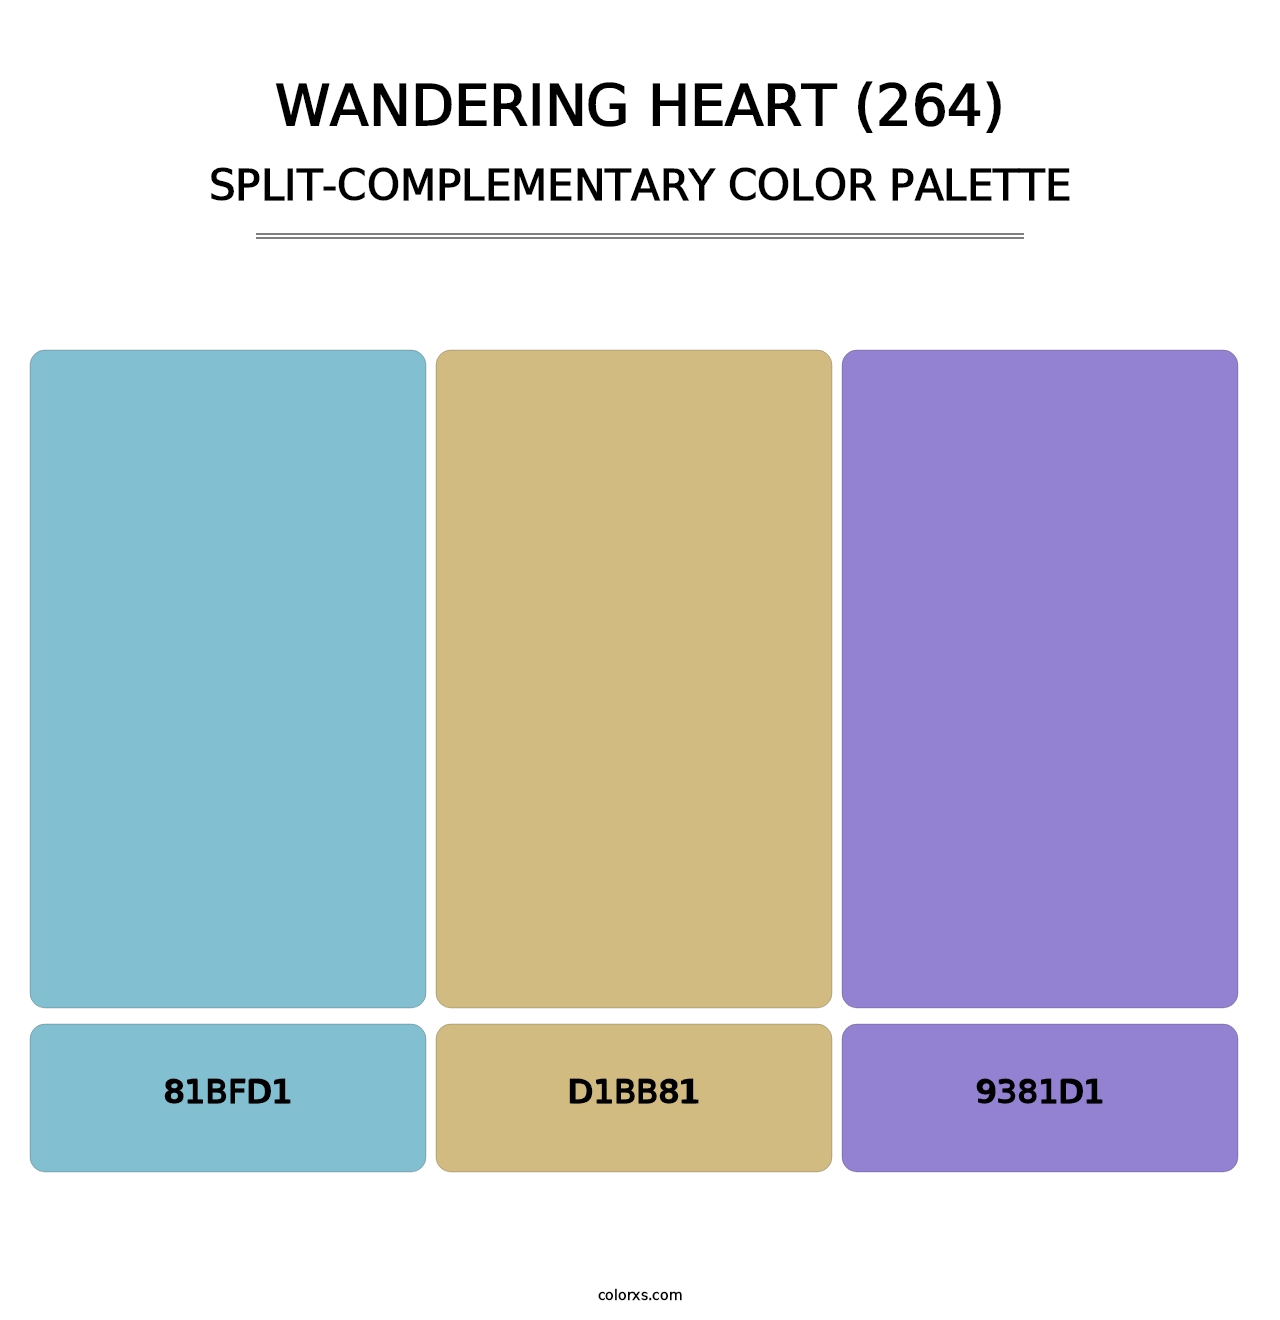 Wandering Heart (264) - Split-Complementary Color Palette